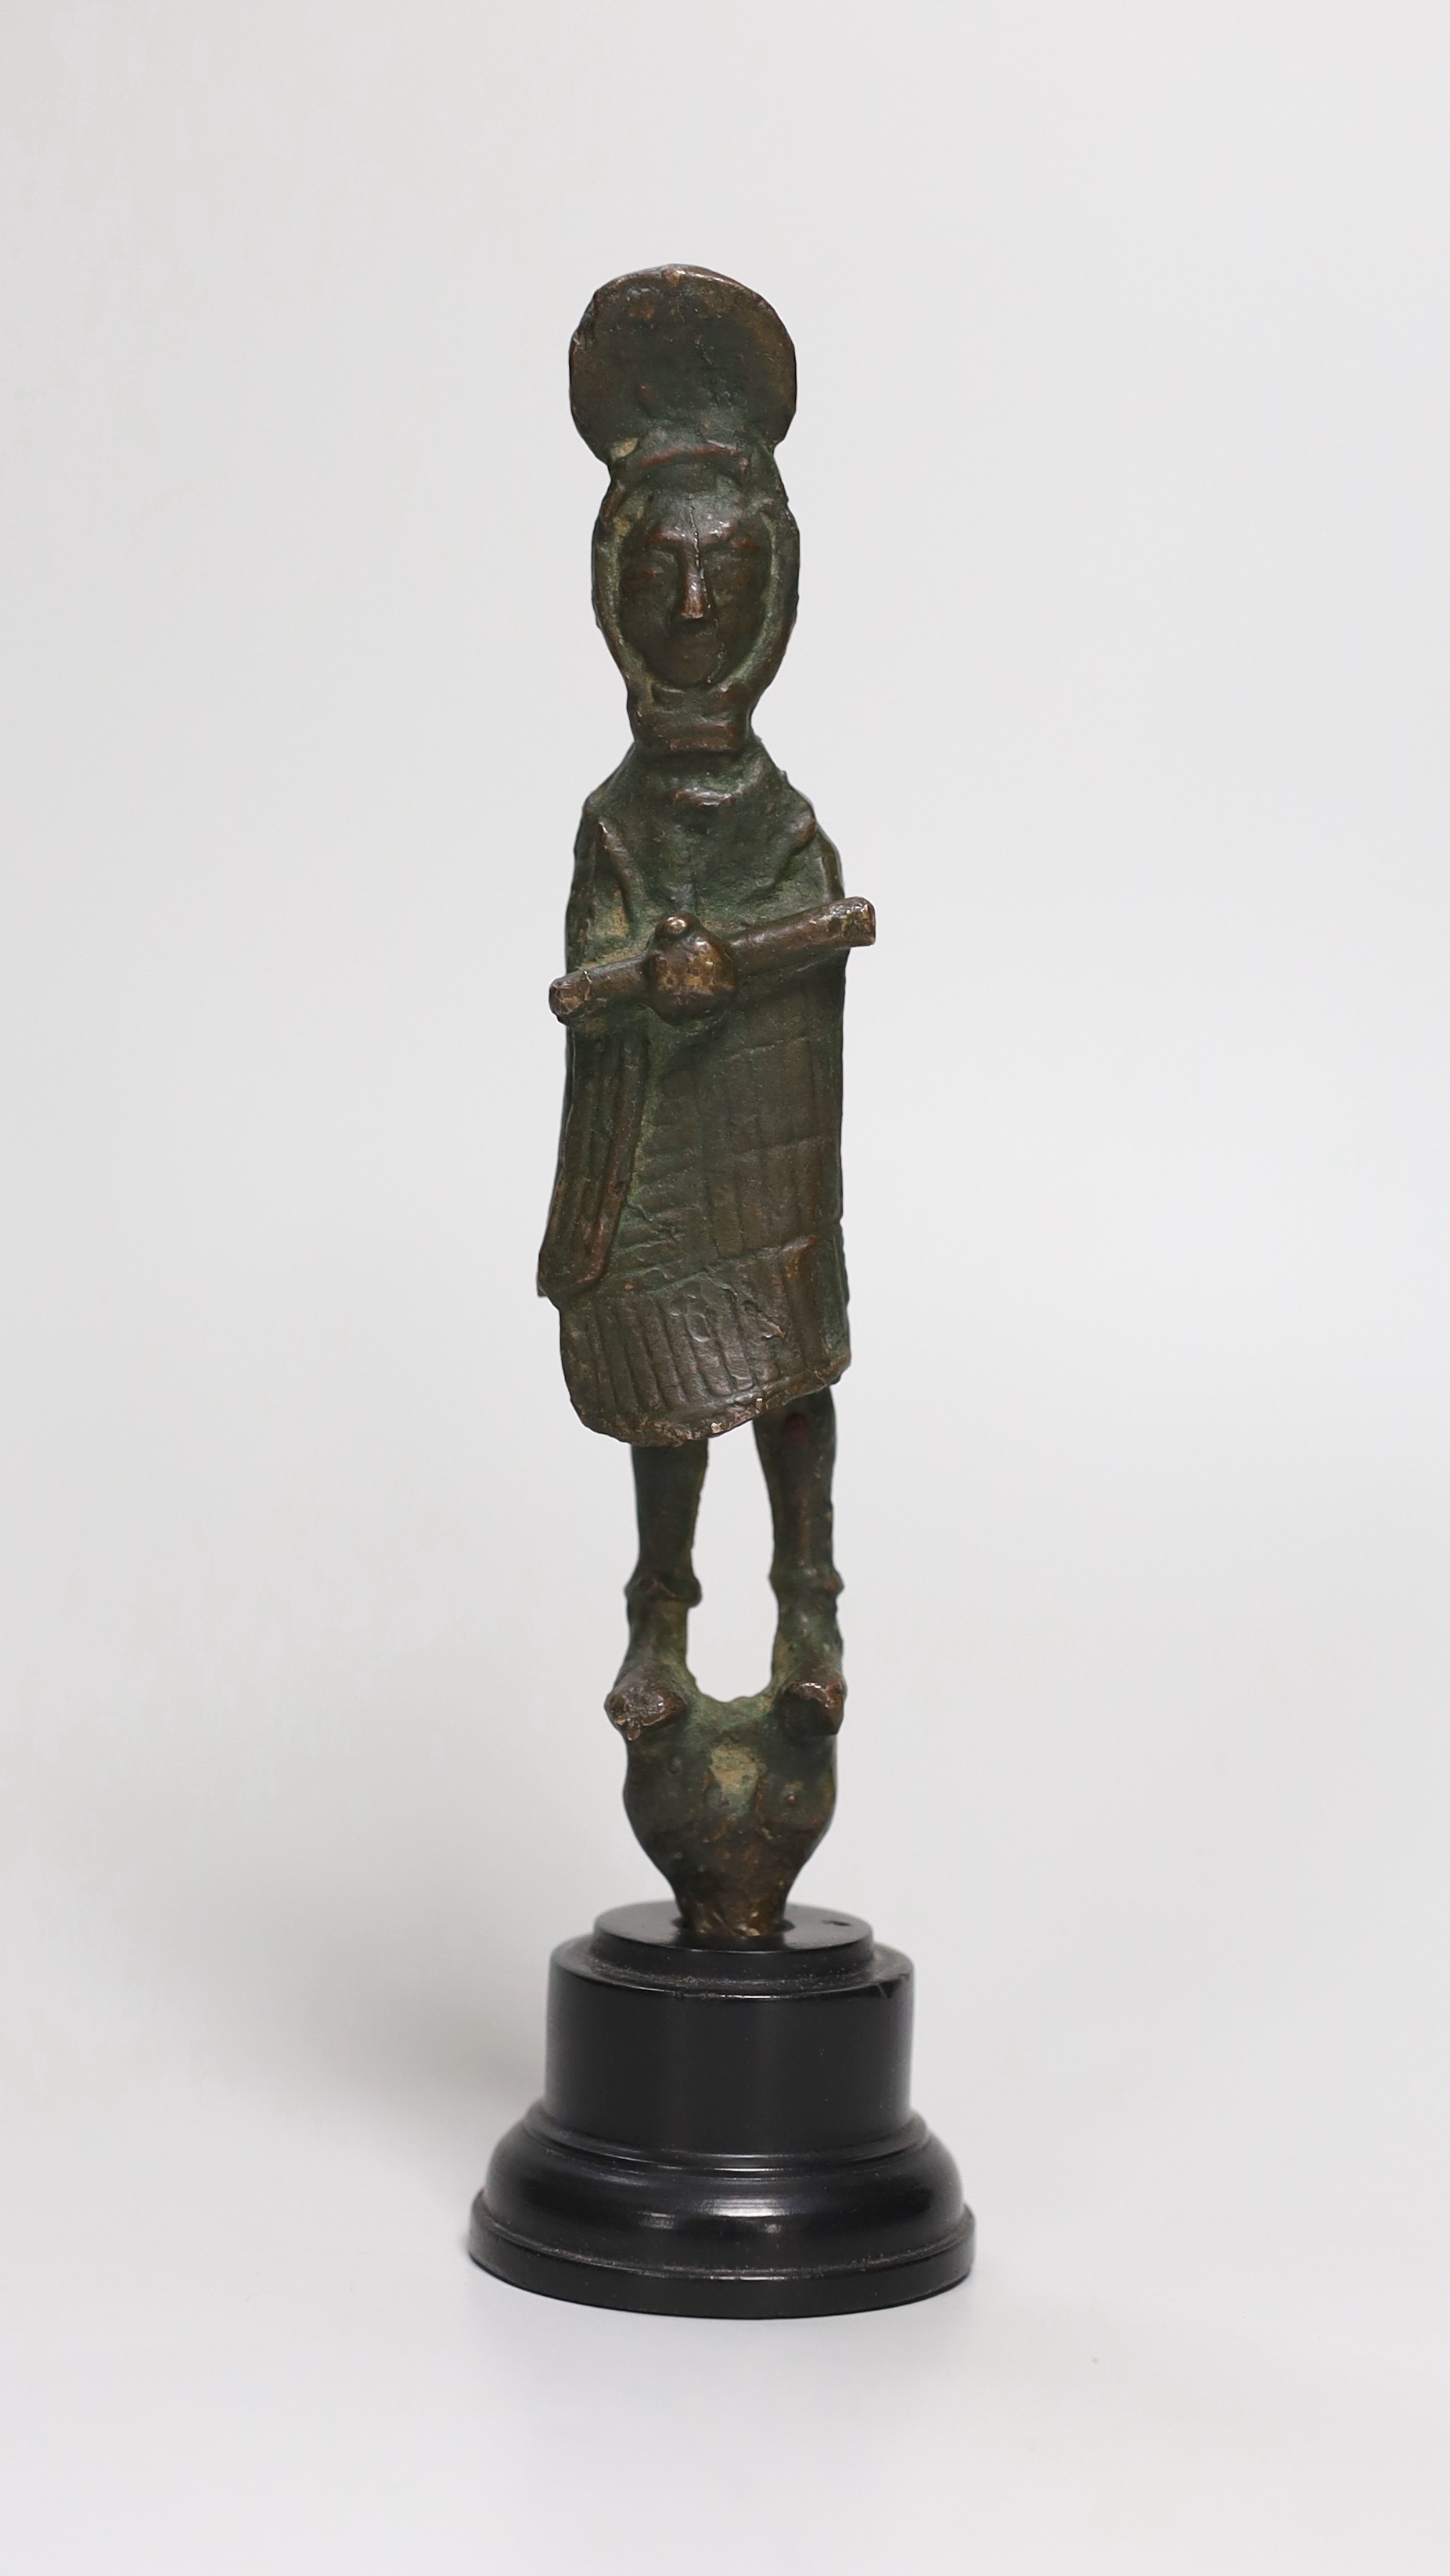 A bronze figure, Nuragic culture or later, from Sardinia, 18cm